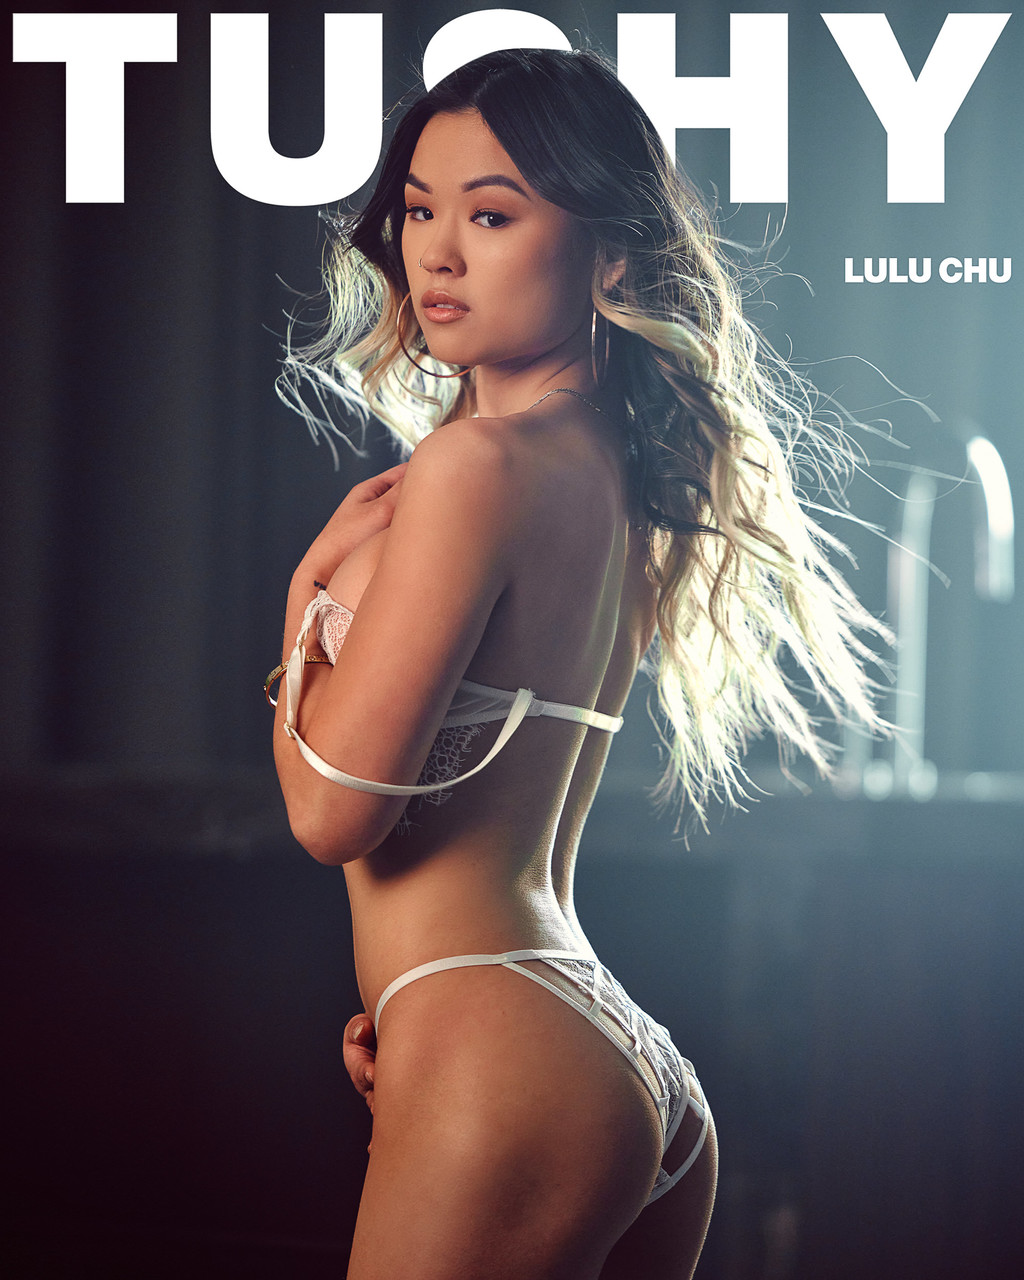 Petite Asian Lulu Chu gets anal fucked & gives an ass to mouth cock licking porno foto #425580936 | Tushy Pics, Lulu Chu, Mick Blue, Asian, mobiele porno